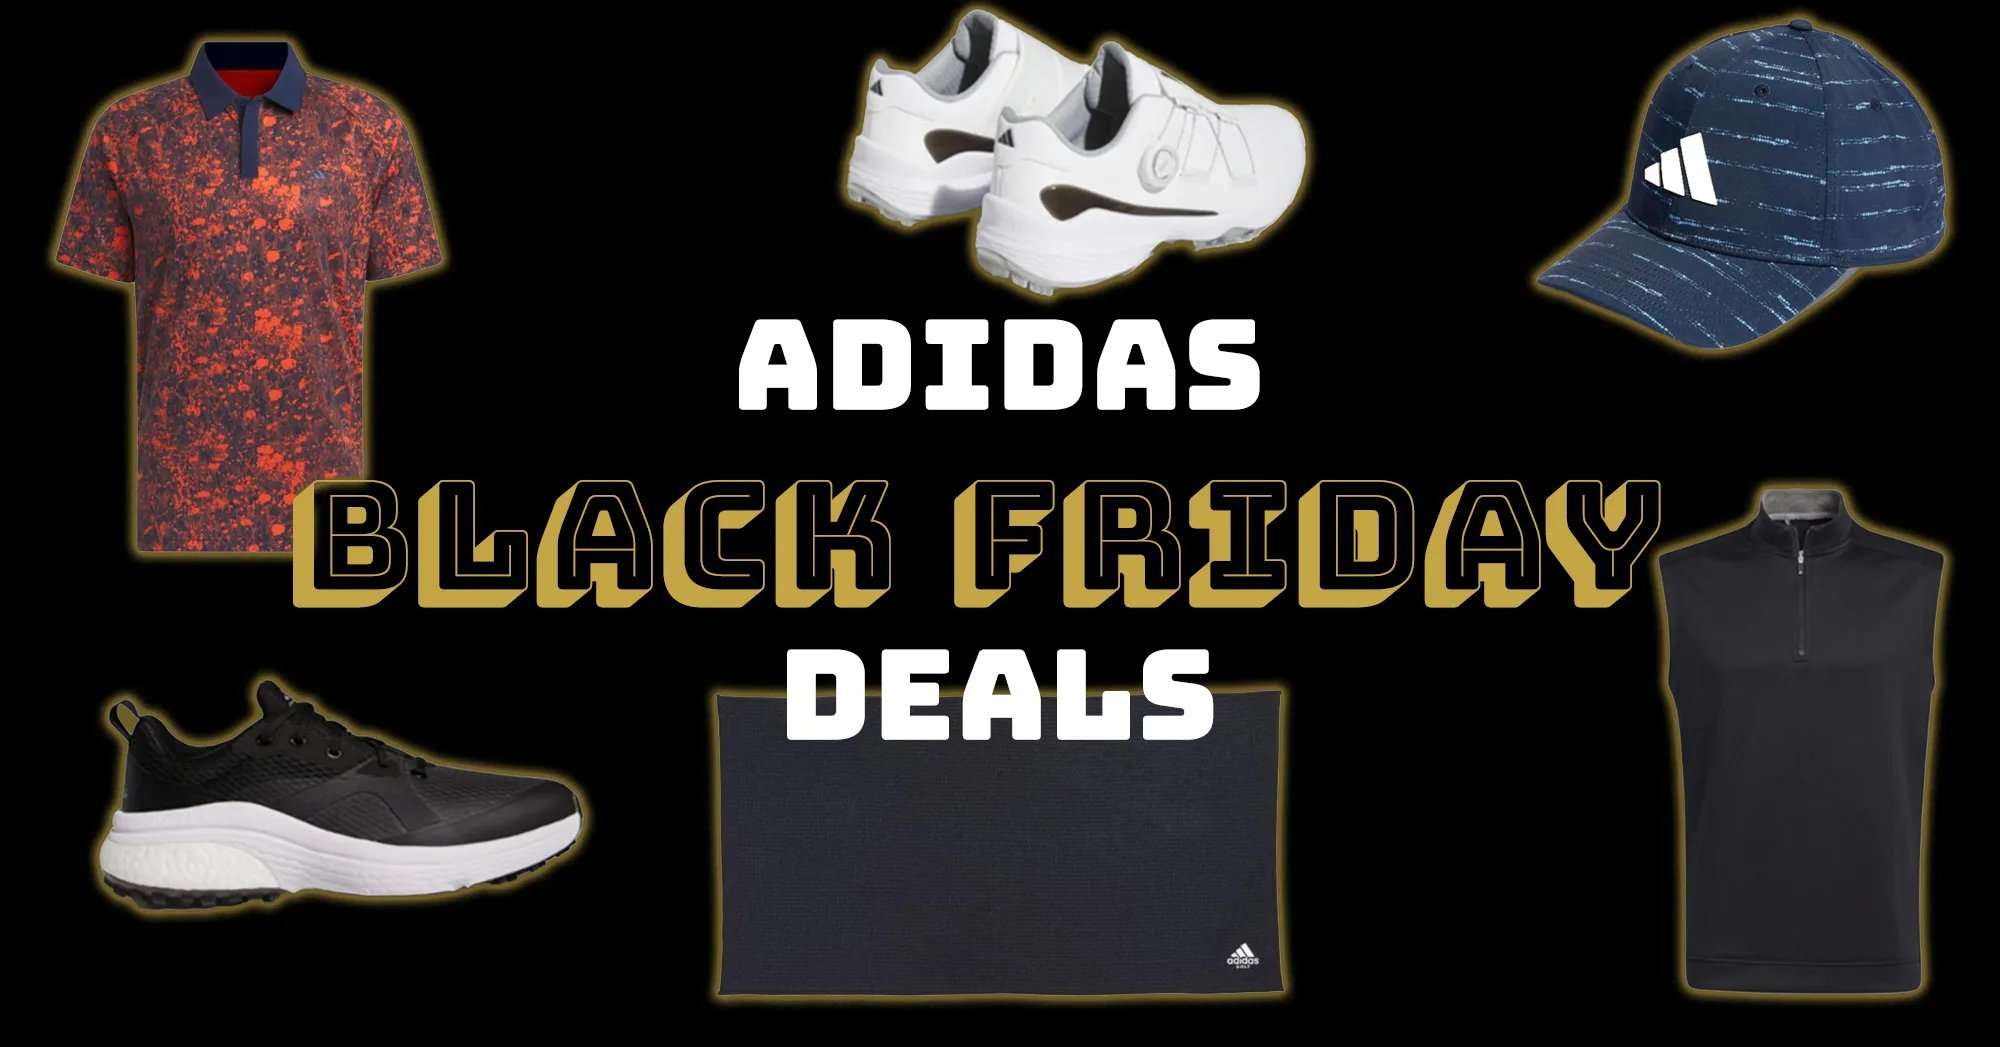 Adidas Black Friday Golf Deals